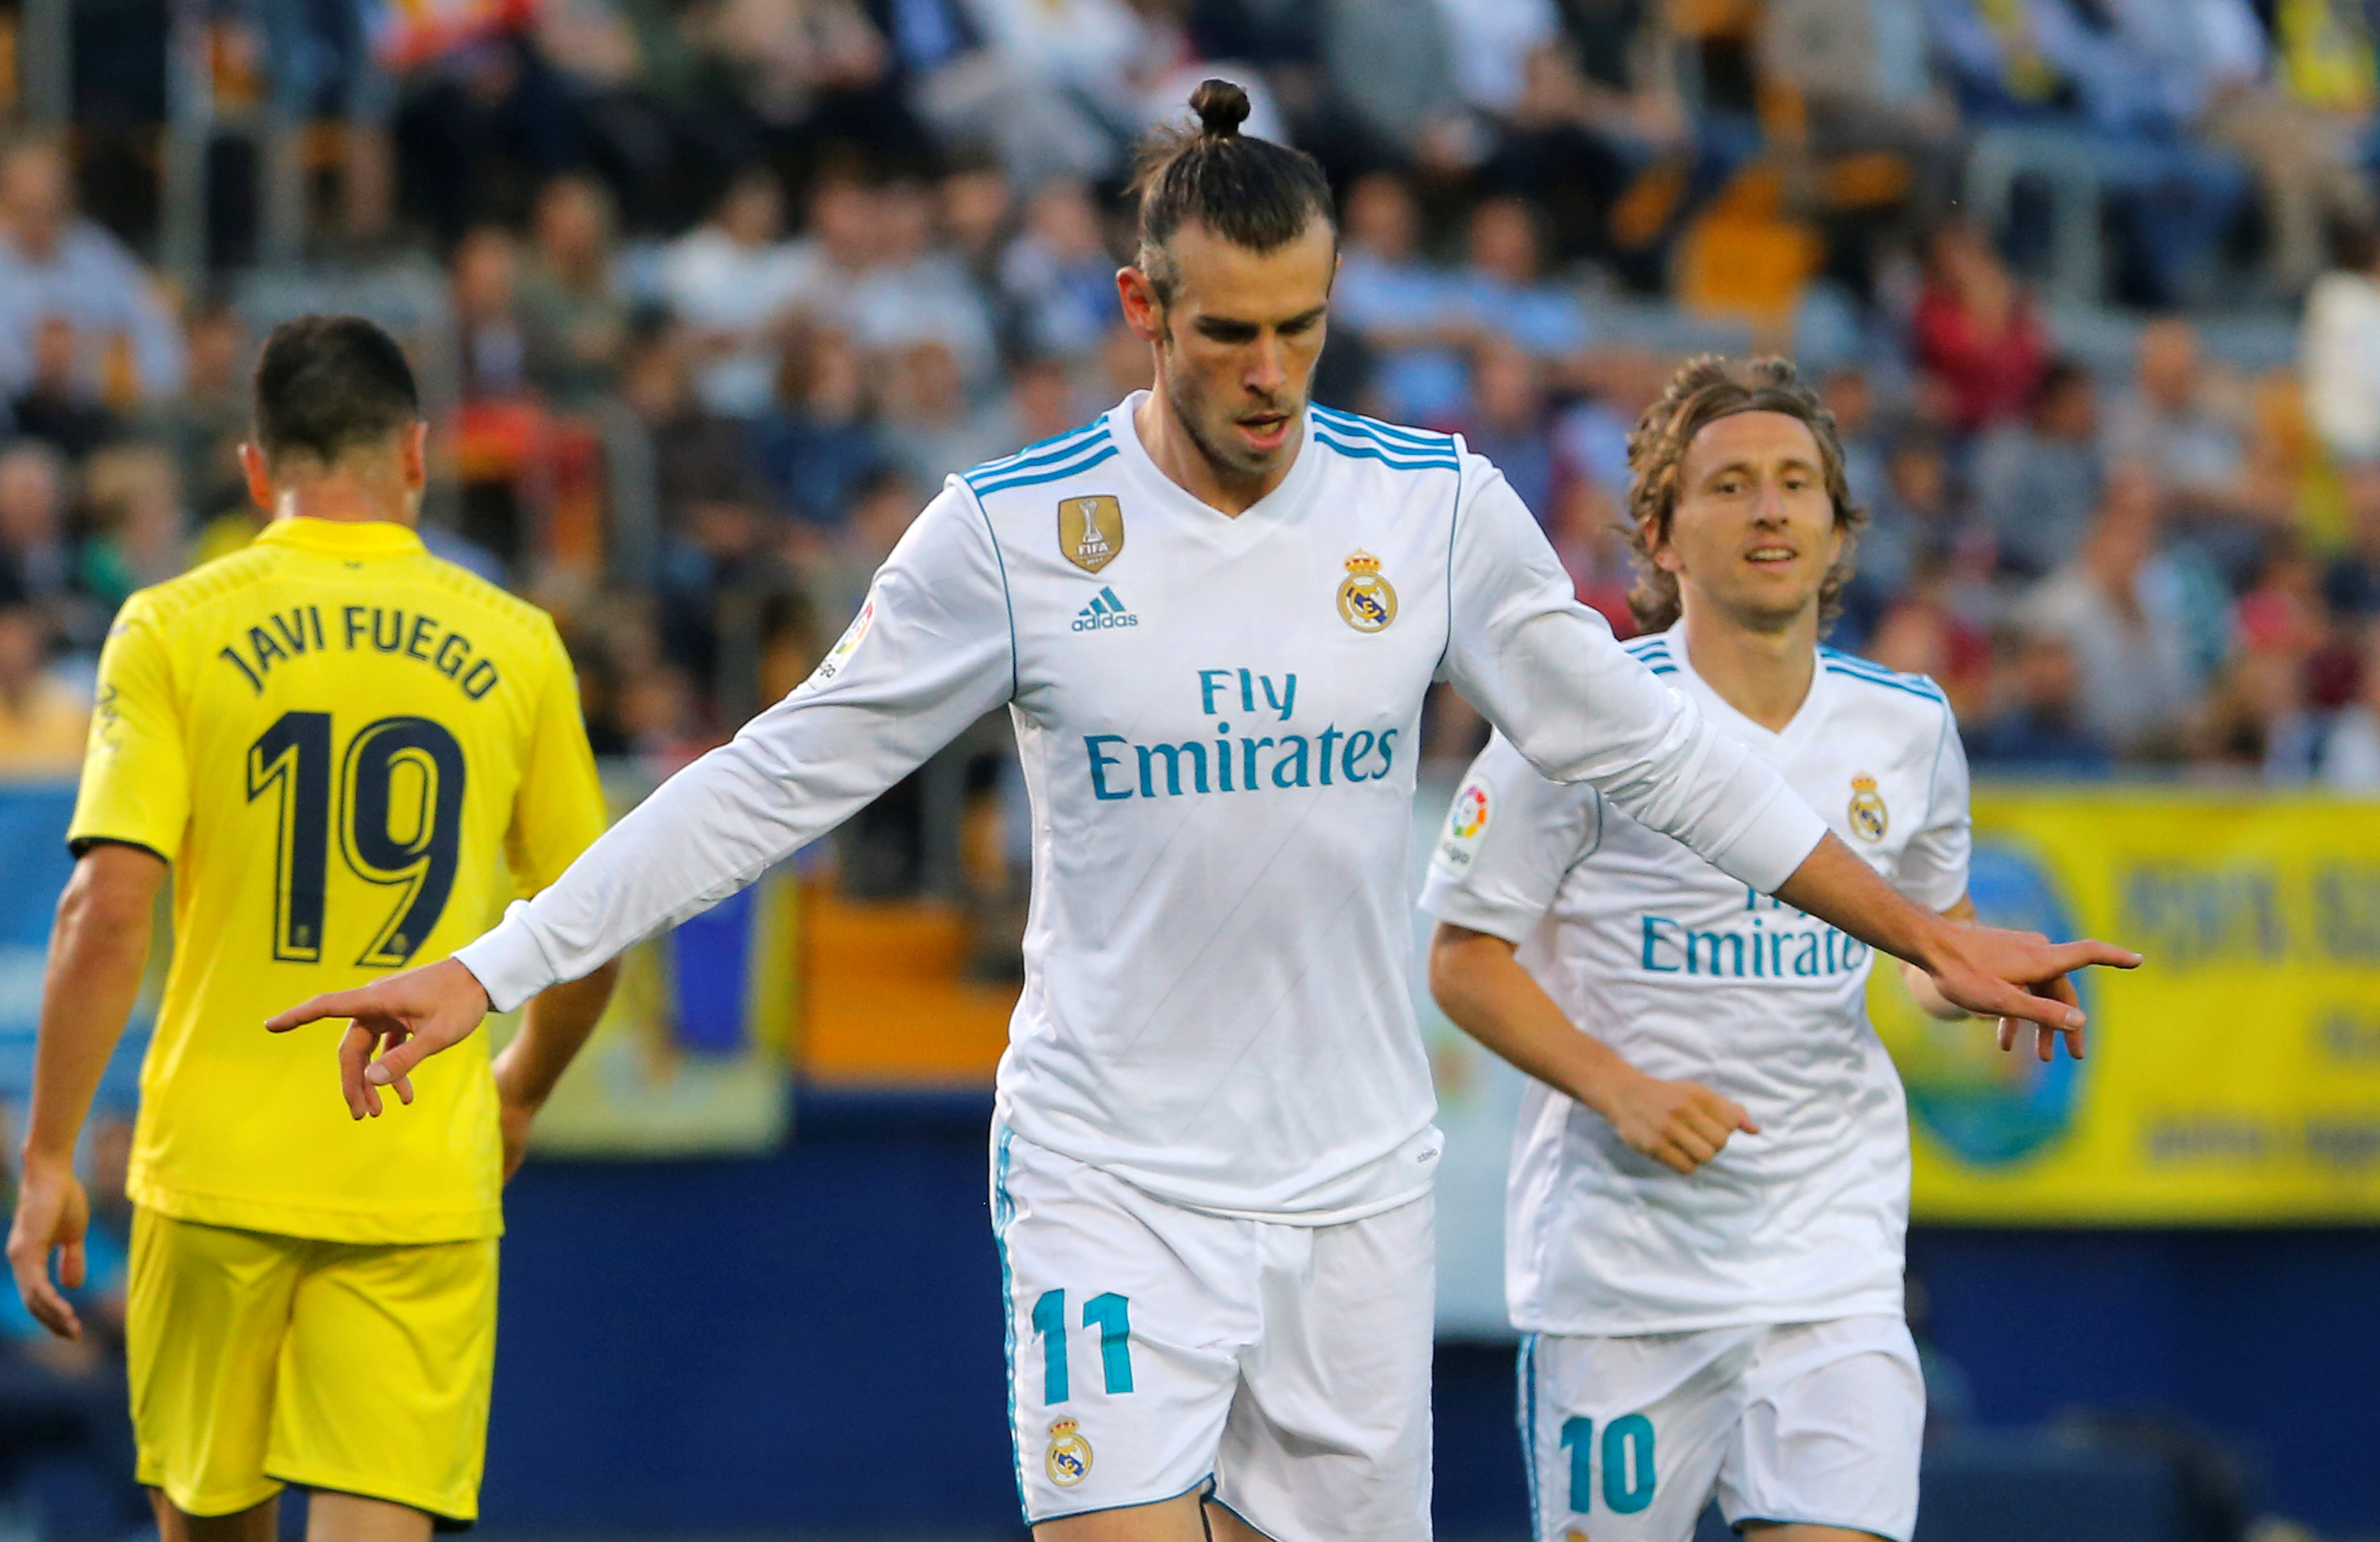 Football: Zidane lauds resurgent Bale but gives no clues ahead of final